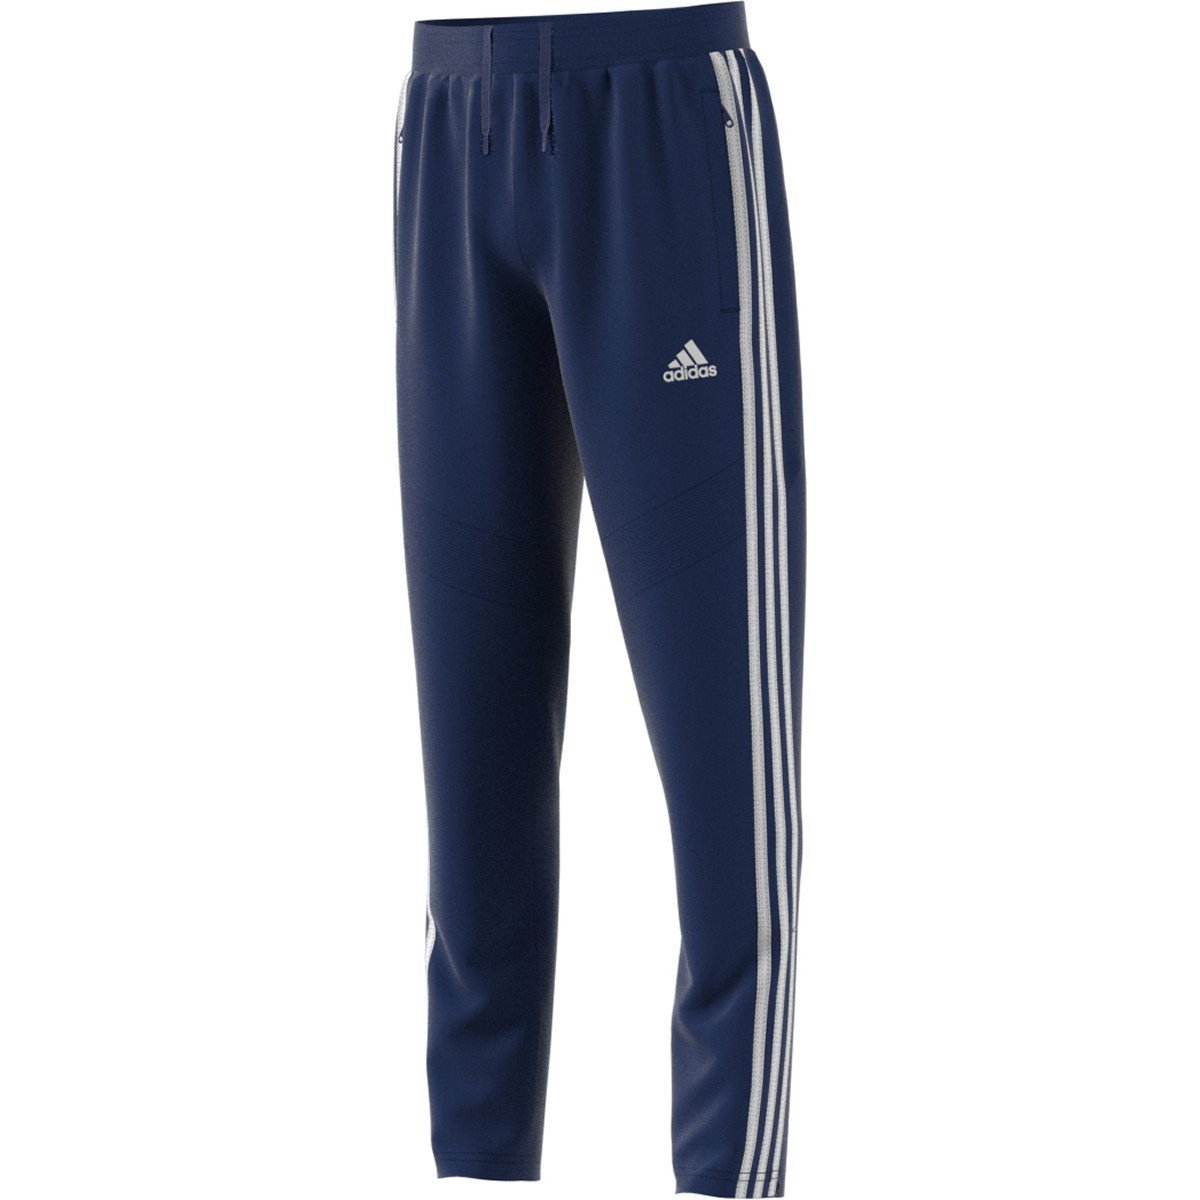 Adidas Womens Medium Climacool Tiro 13 Soccer Training Pants 2014 Model  Z05735